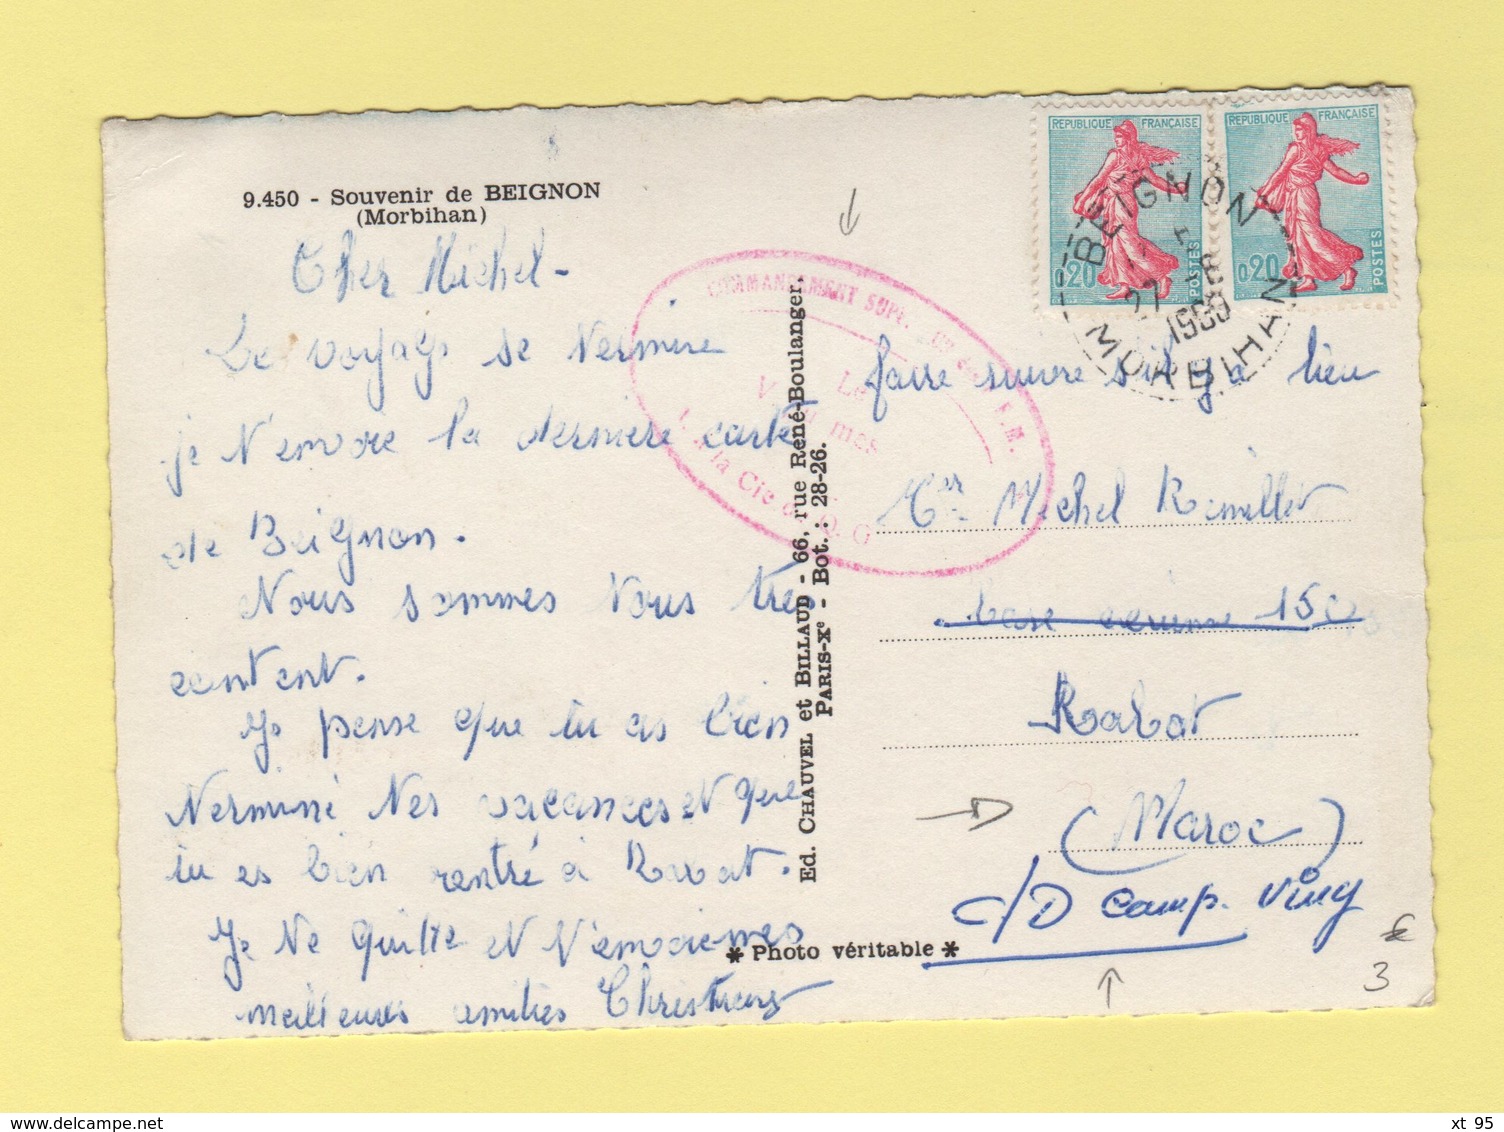 Semeuse - Carte Destination Maroc - Reexpediee Vers Le Camp De Viny - 1960 - Beignon Morbihan - 1961-....